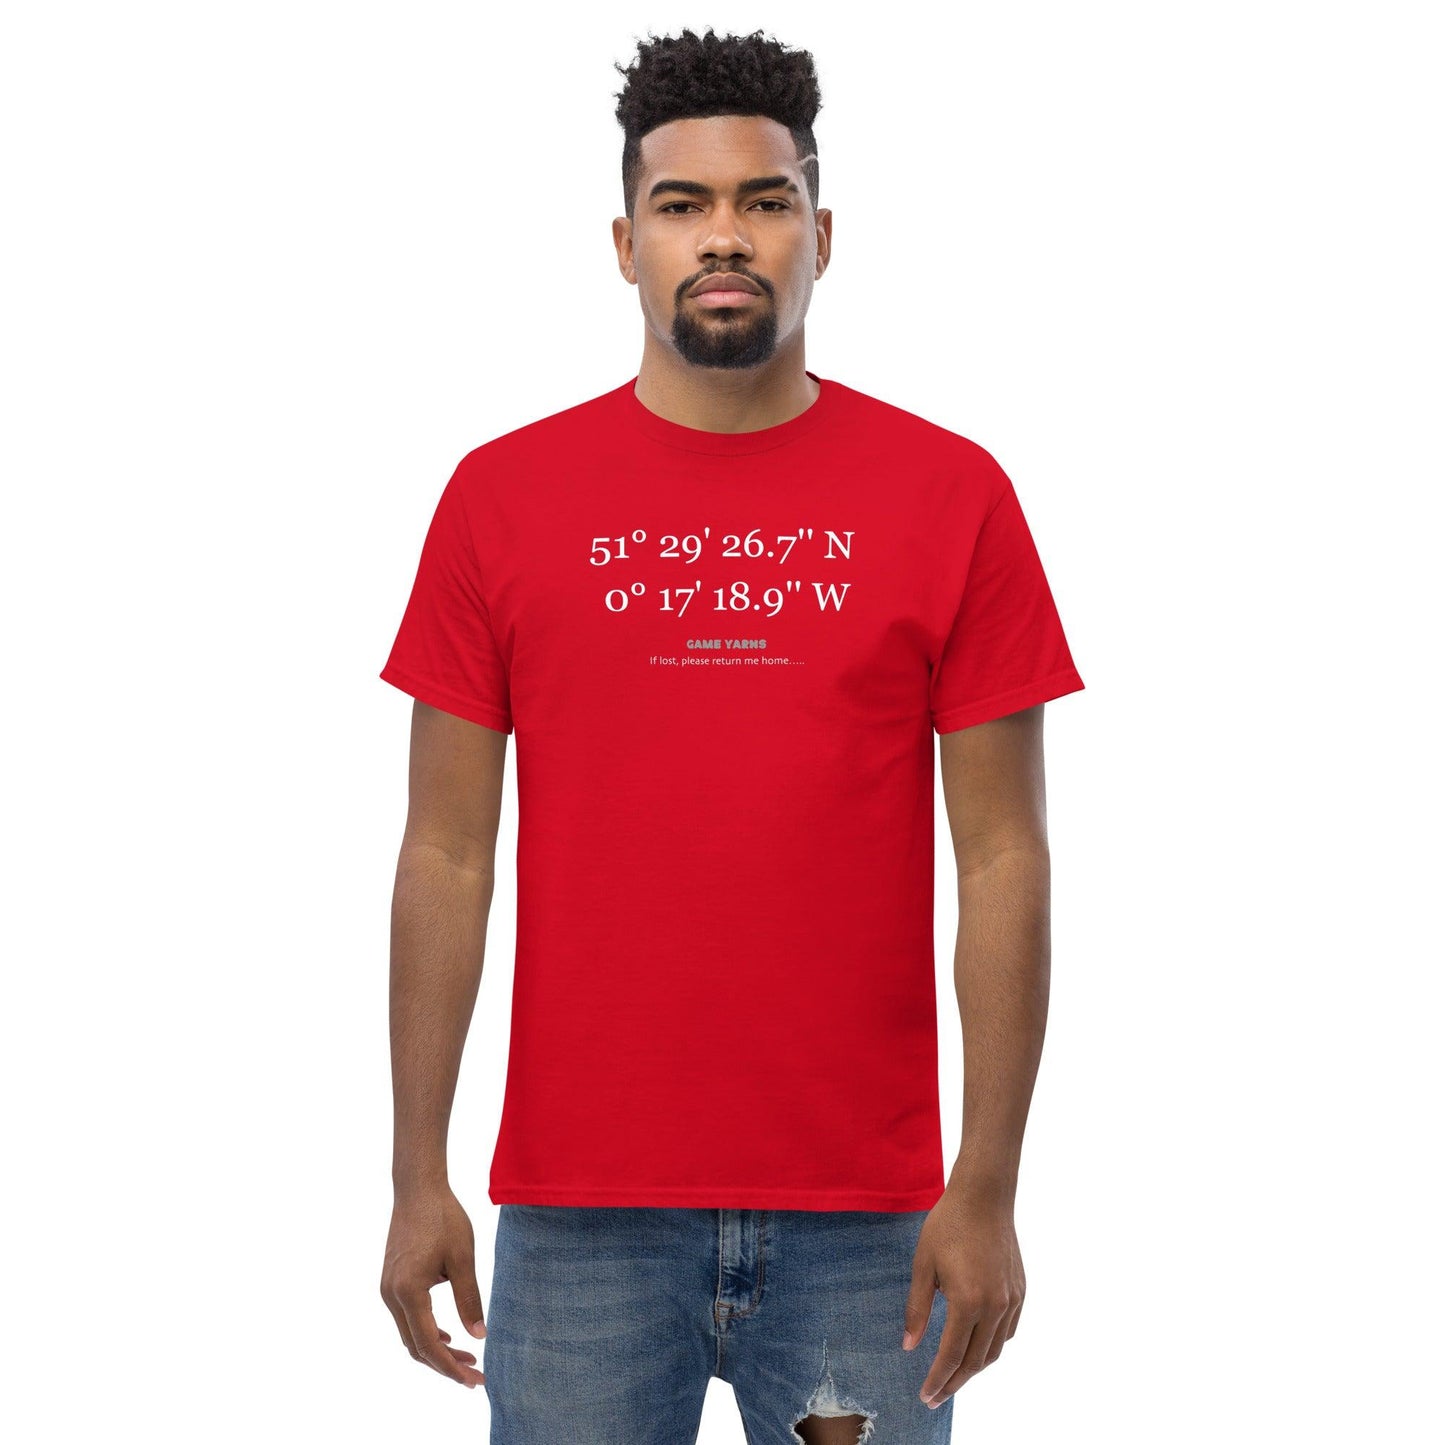 Brentford GPS T-shirt - Game Yarns